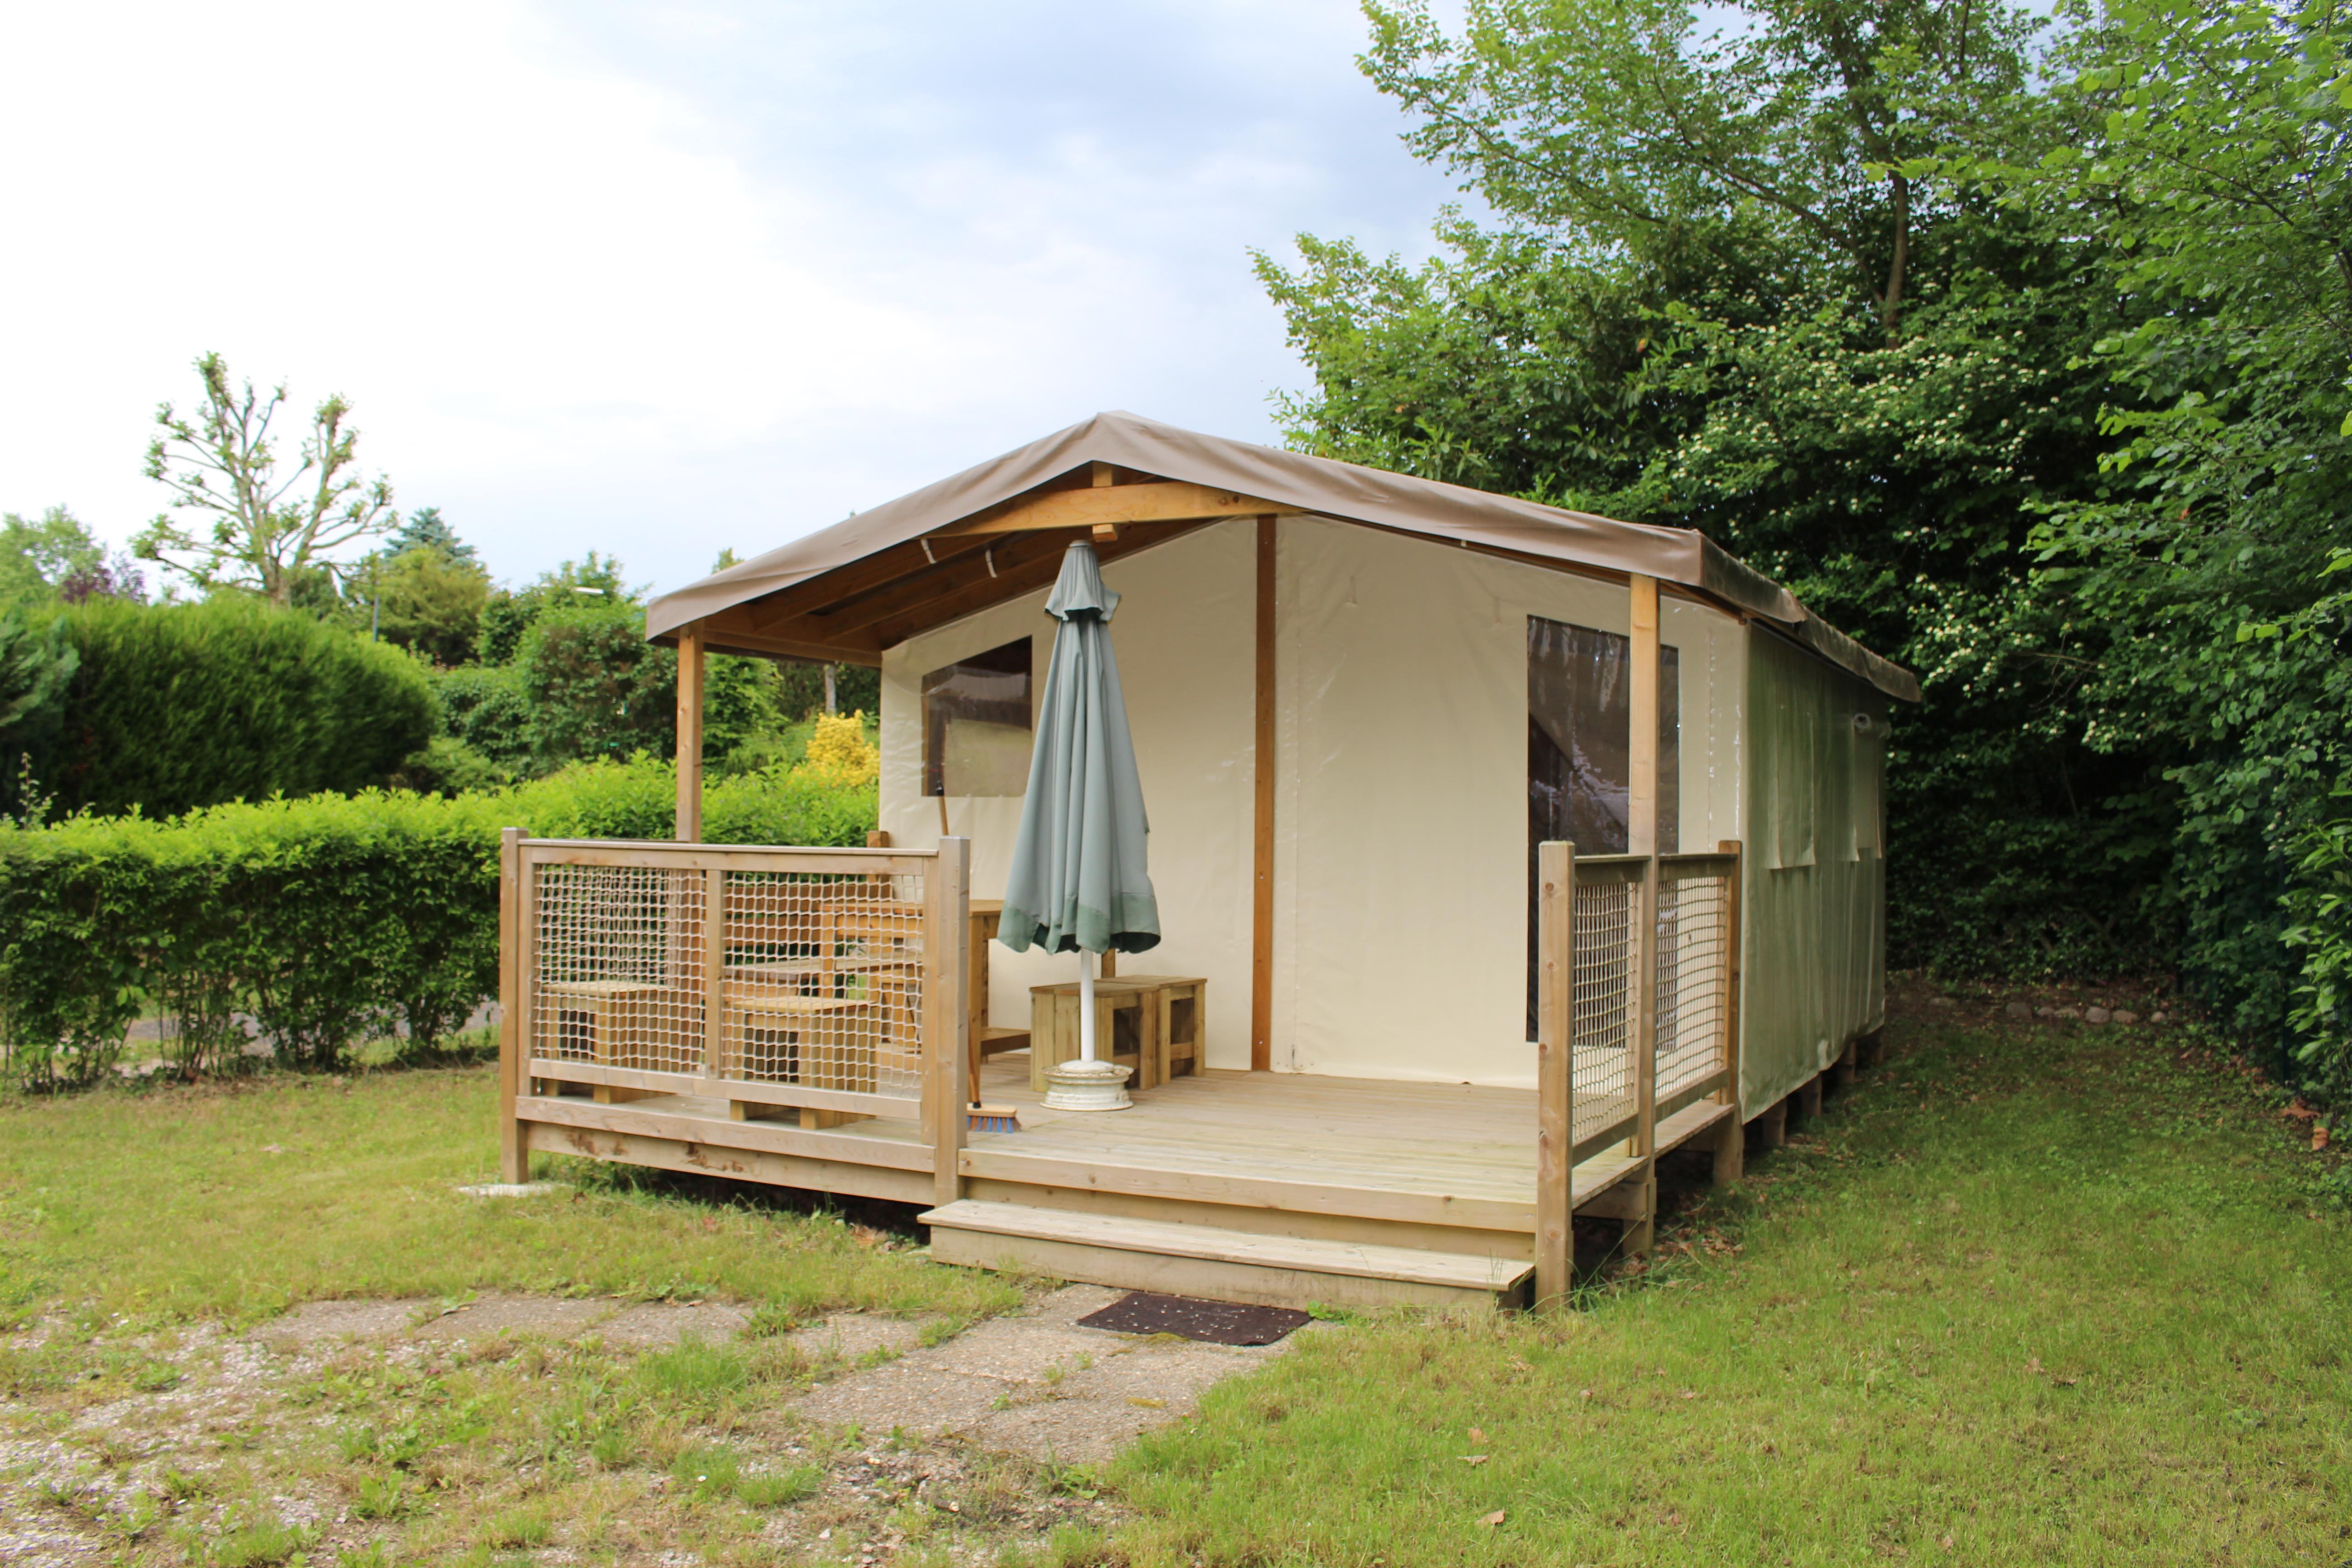 Huuraccommodatie - Tent Eco Lodge Sahari 20M² (Zonder Privé Sanitair) - Camping La Renouillère